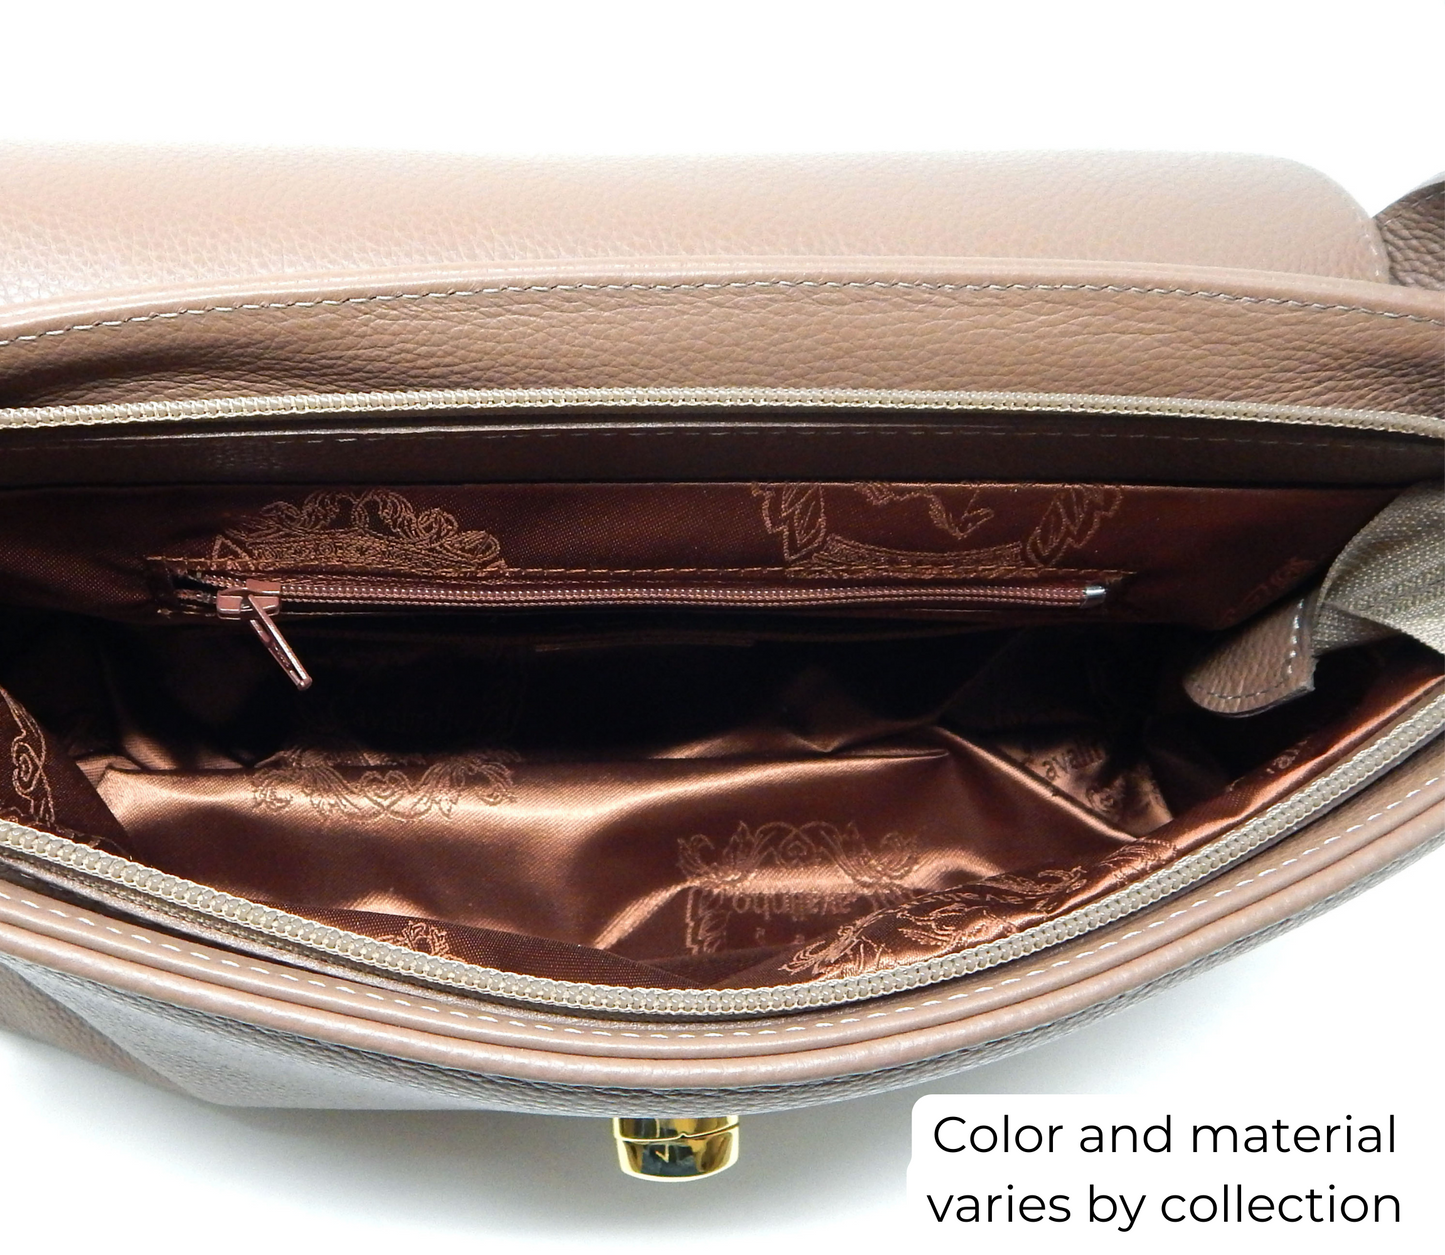 #color_ Beige White | Cavalinho Gallop Patent Leather Handbag - Beige White - inside_0514_3ad8b100-a8b3-4619-ae89-bc41347d2c15